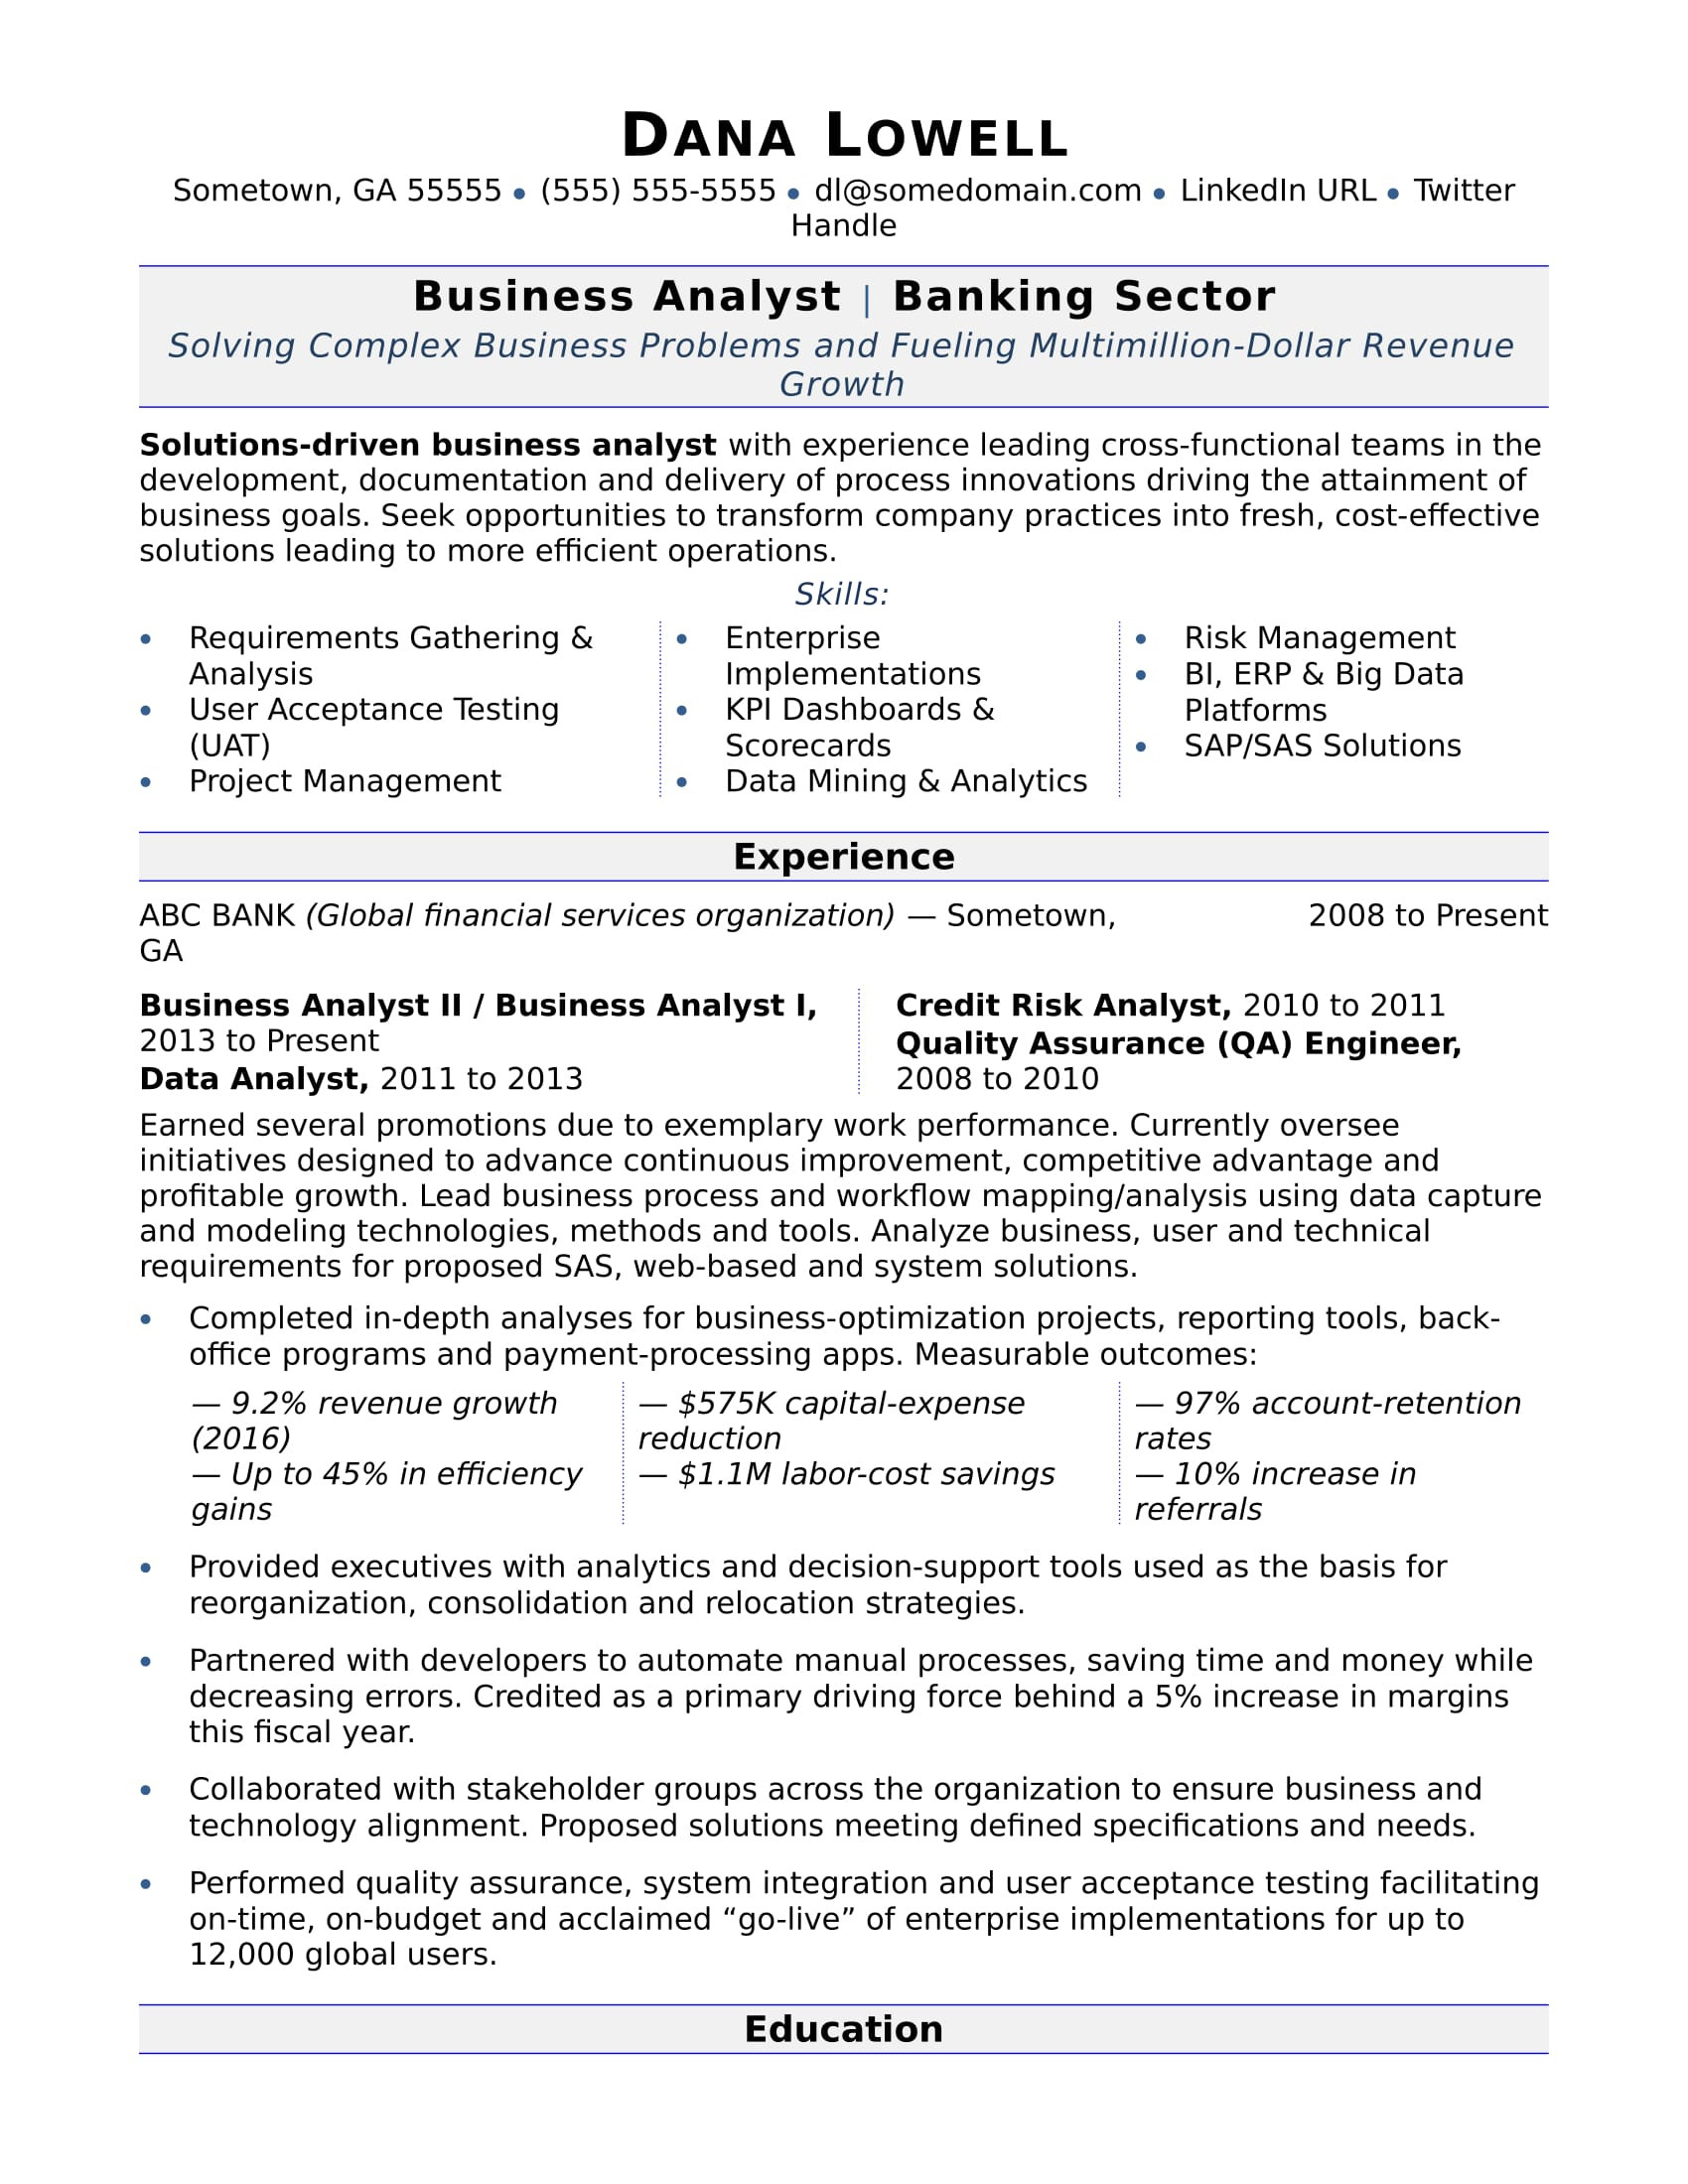 Business Analyst Skills List In Resume Sample Business Analyst Resume Monster.com